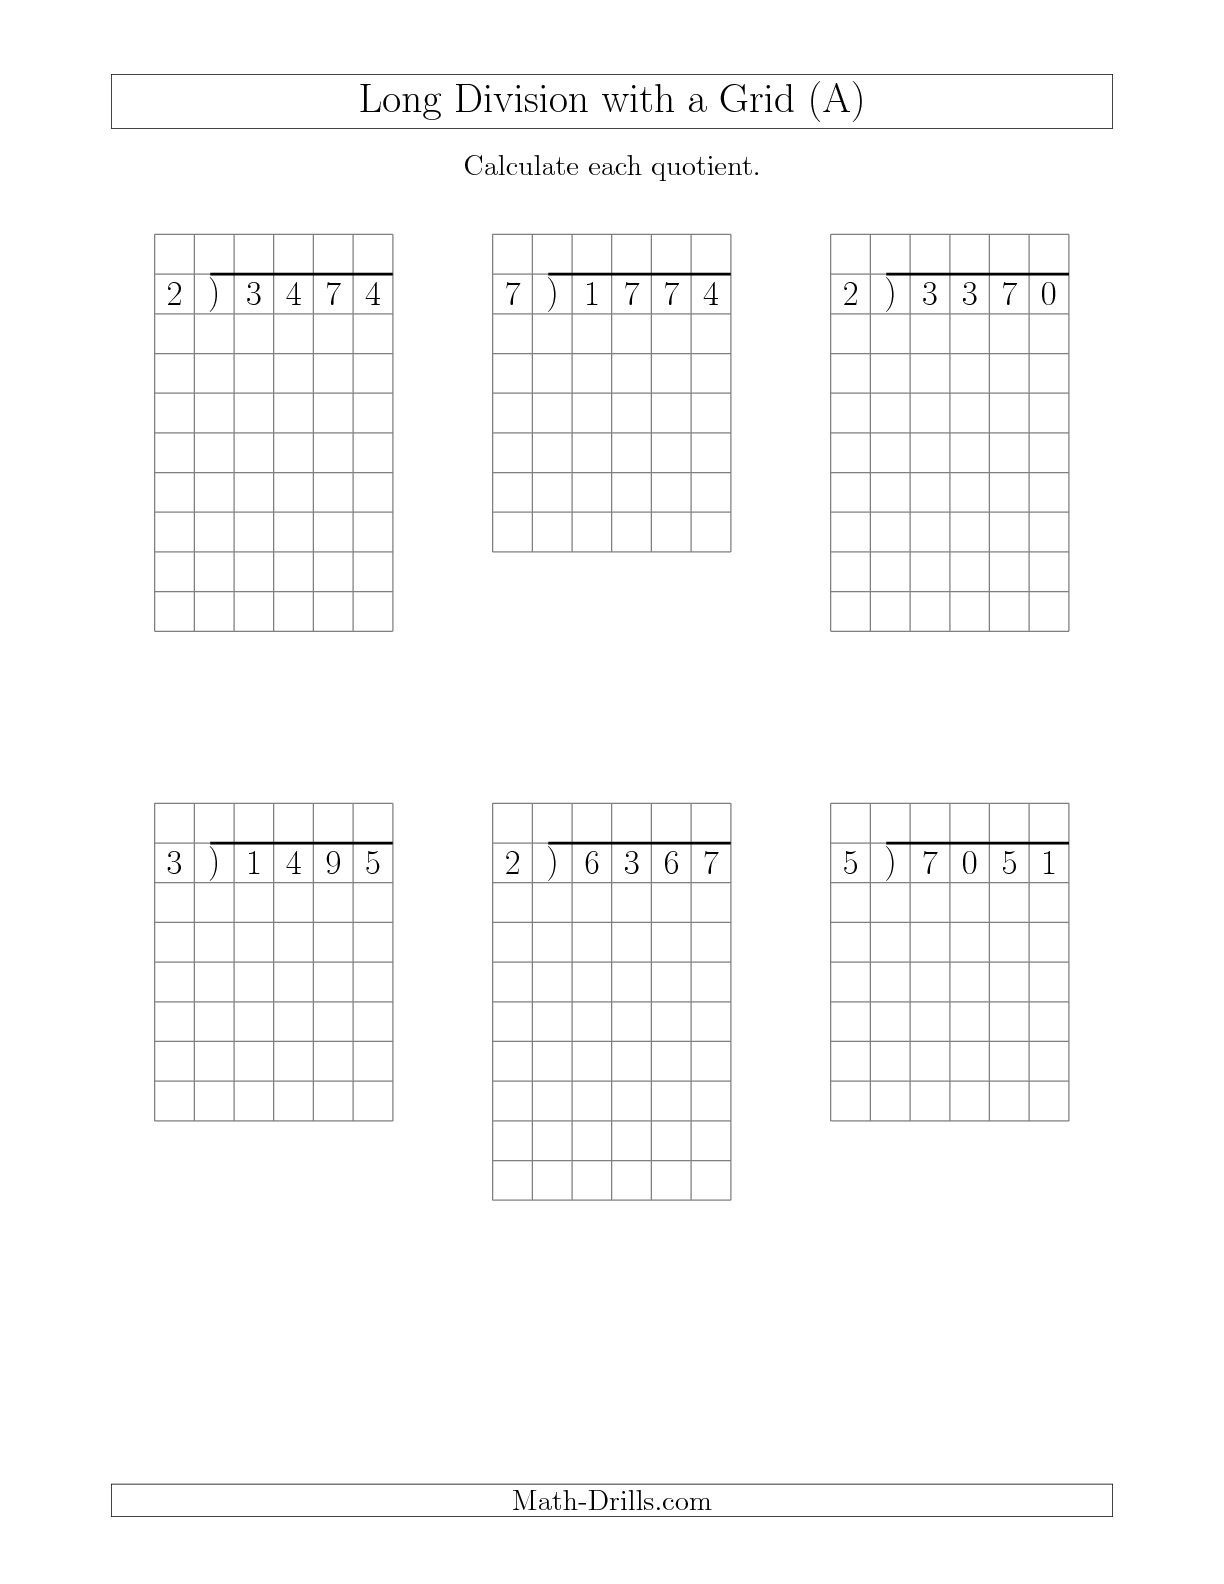 long-division-worksheets-grade-4-with-grid-long-division-worksheets